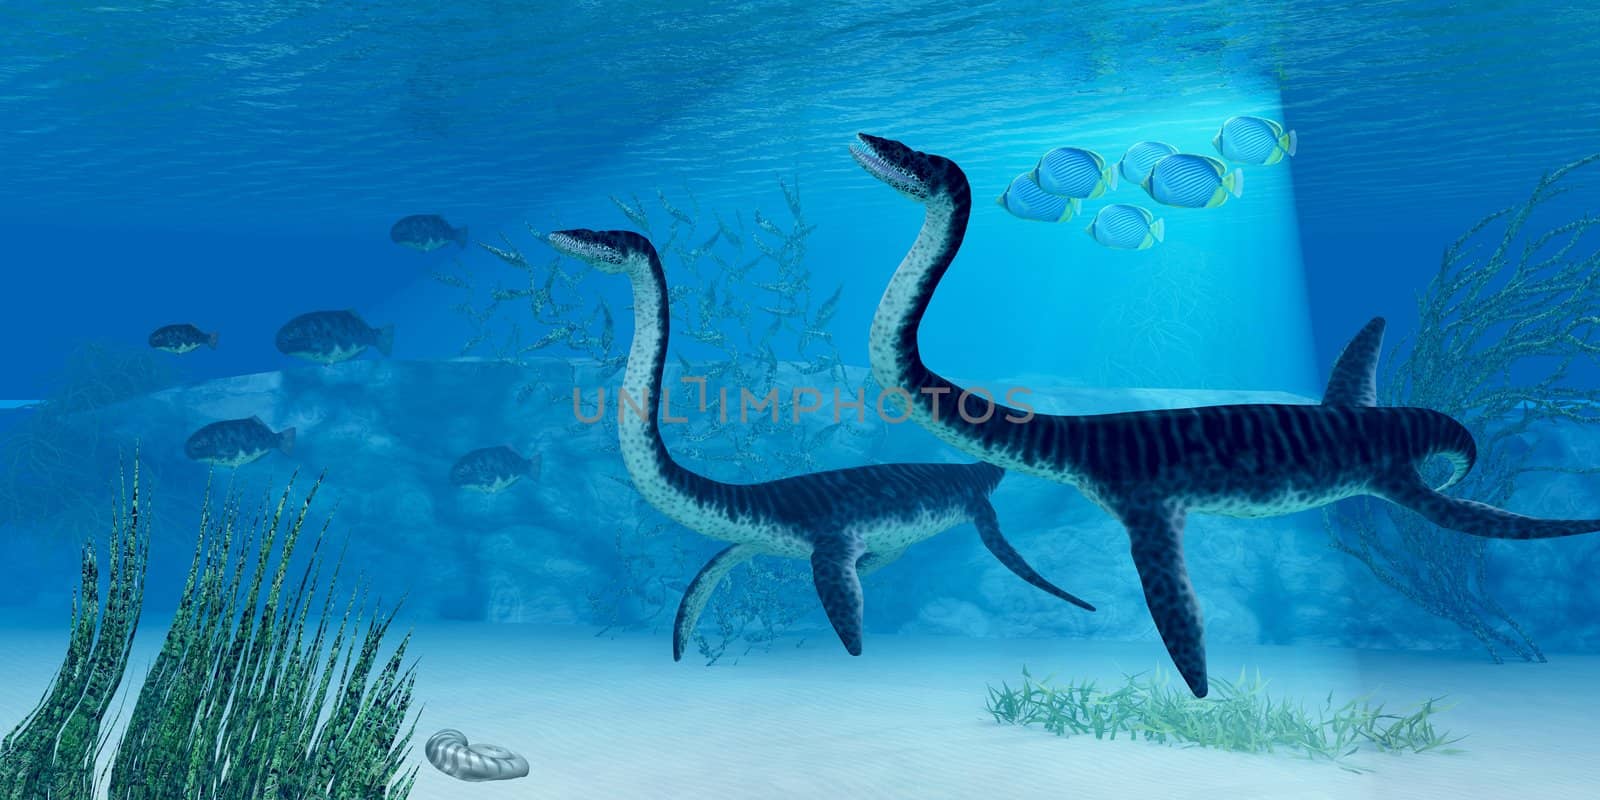 Plesiosaurus Dinosaur by Catmando